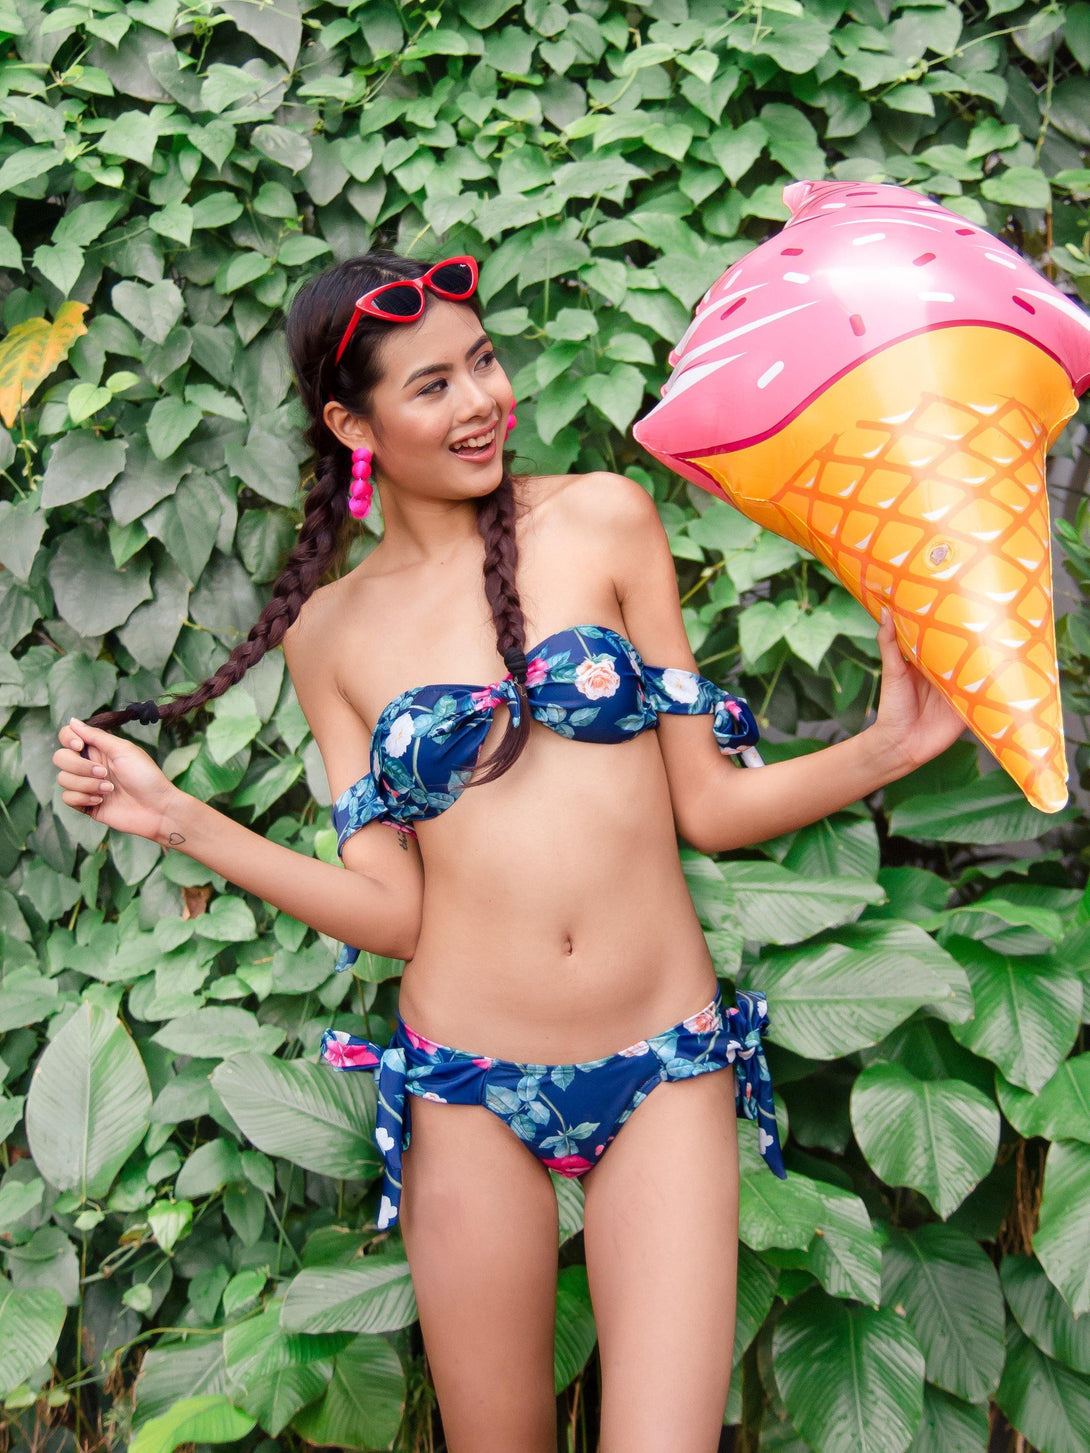 Helena Tropical Off-Shoulder Bikini Set Navy Blue - Pink N' Proper